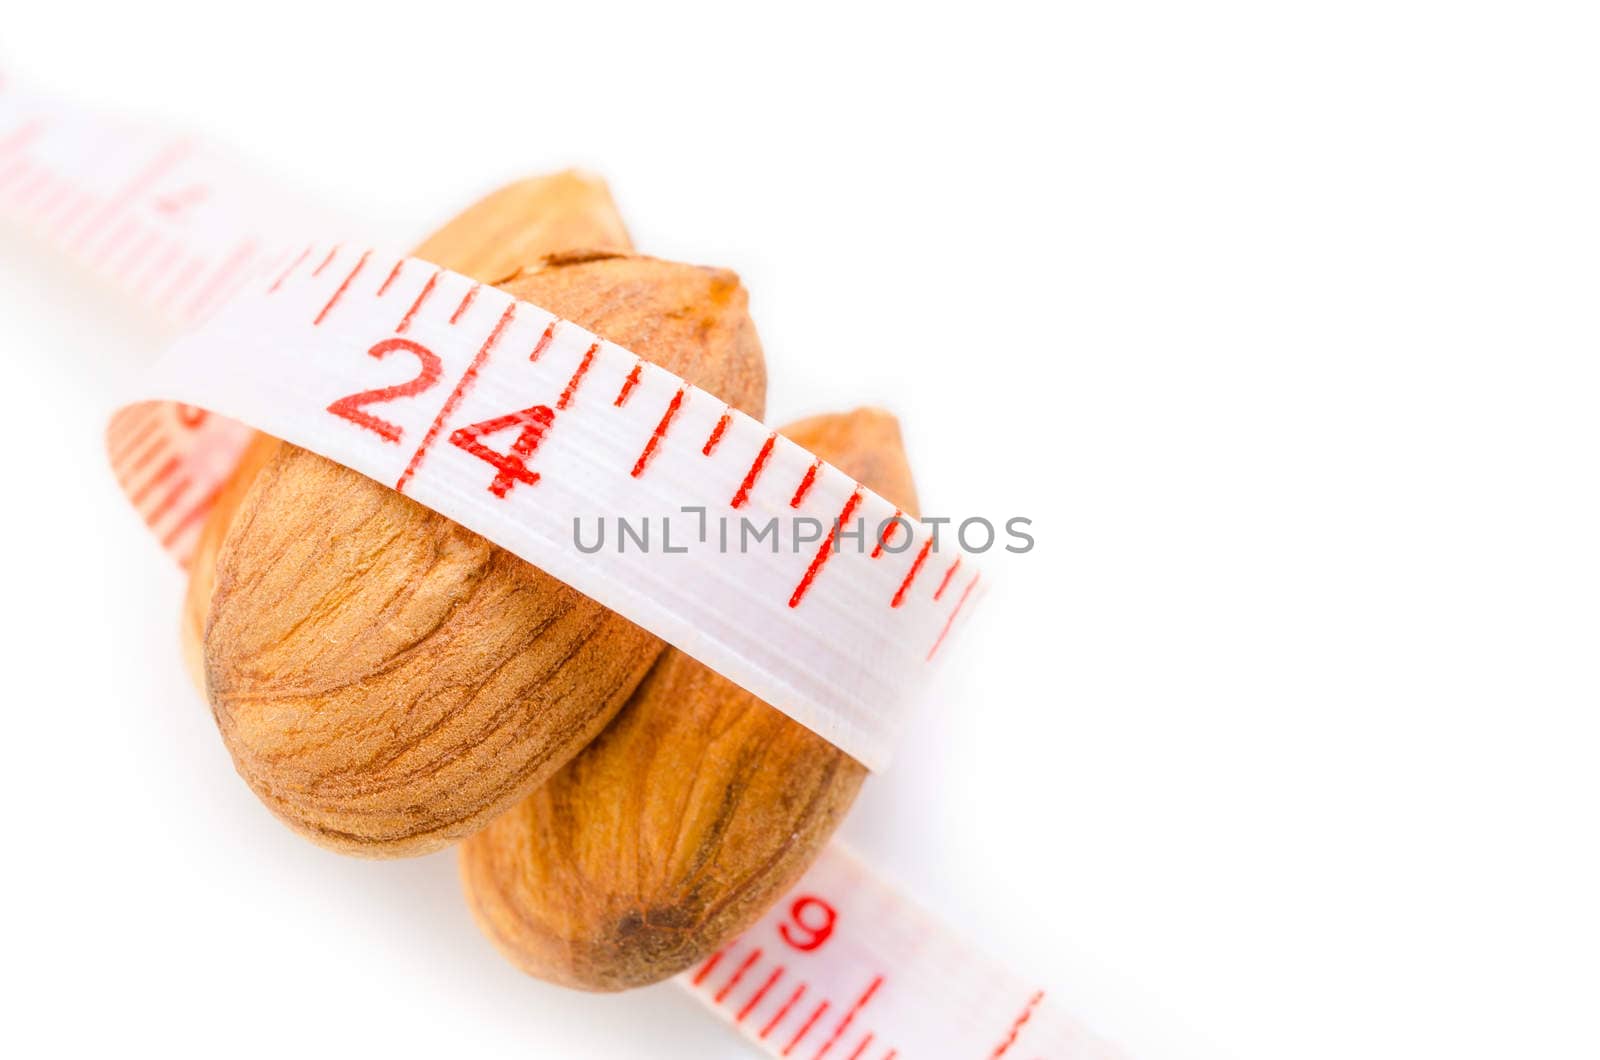 Almond nut and measure tape. by Gamjai